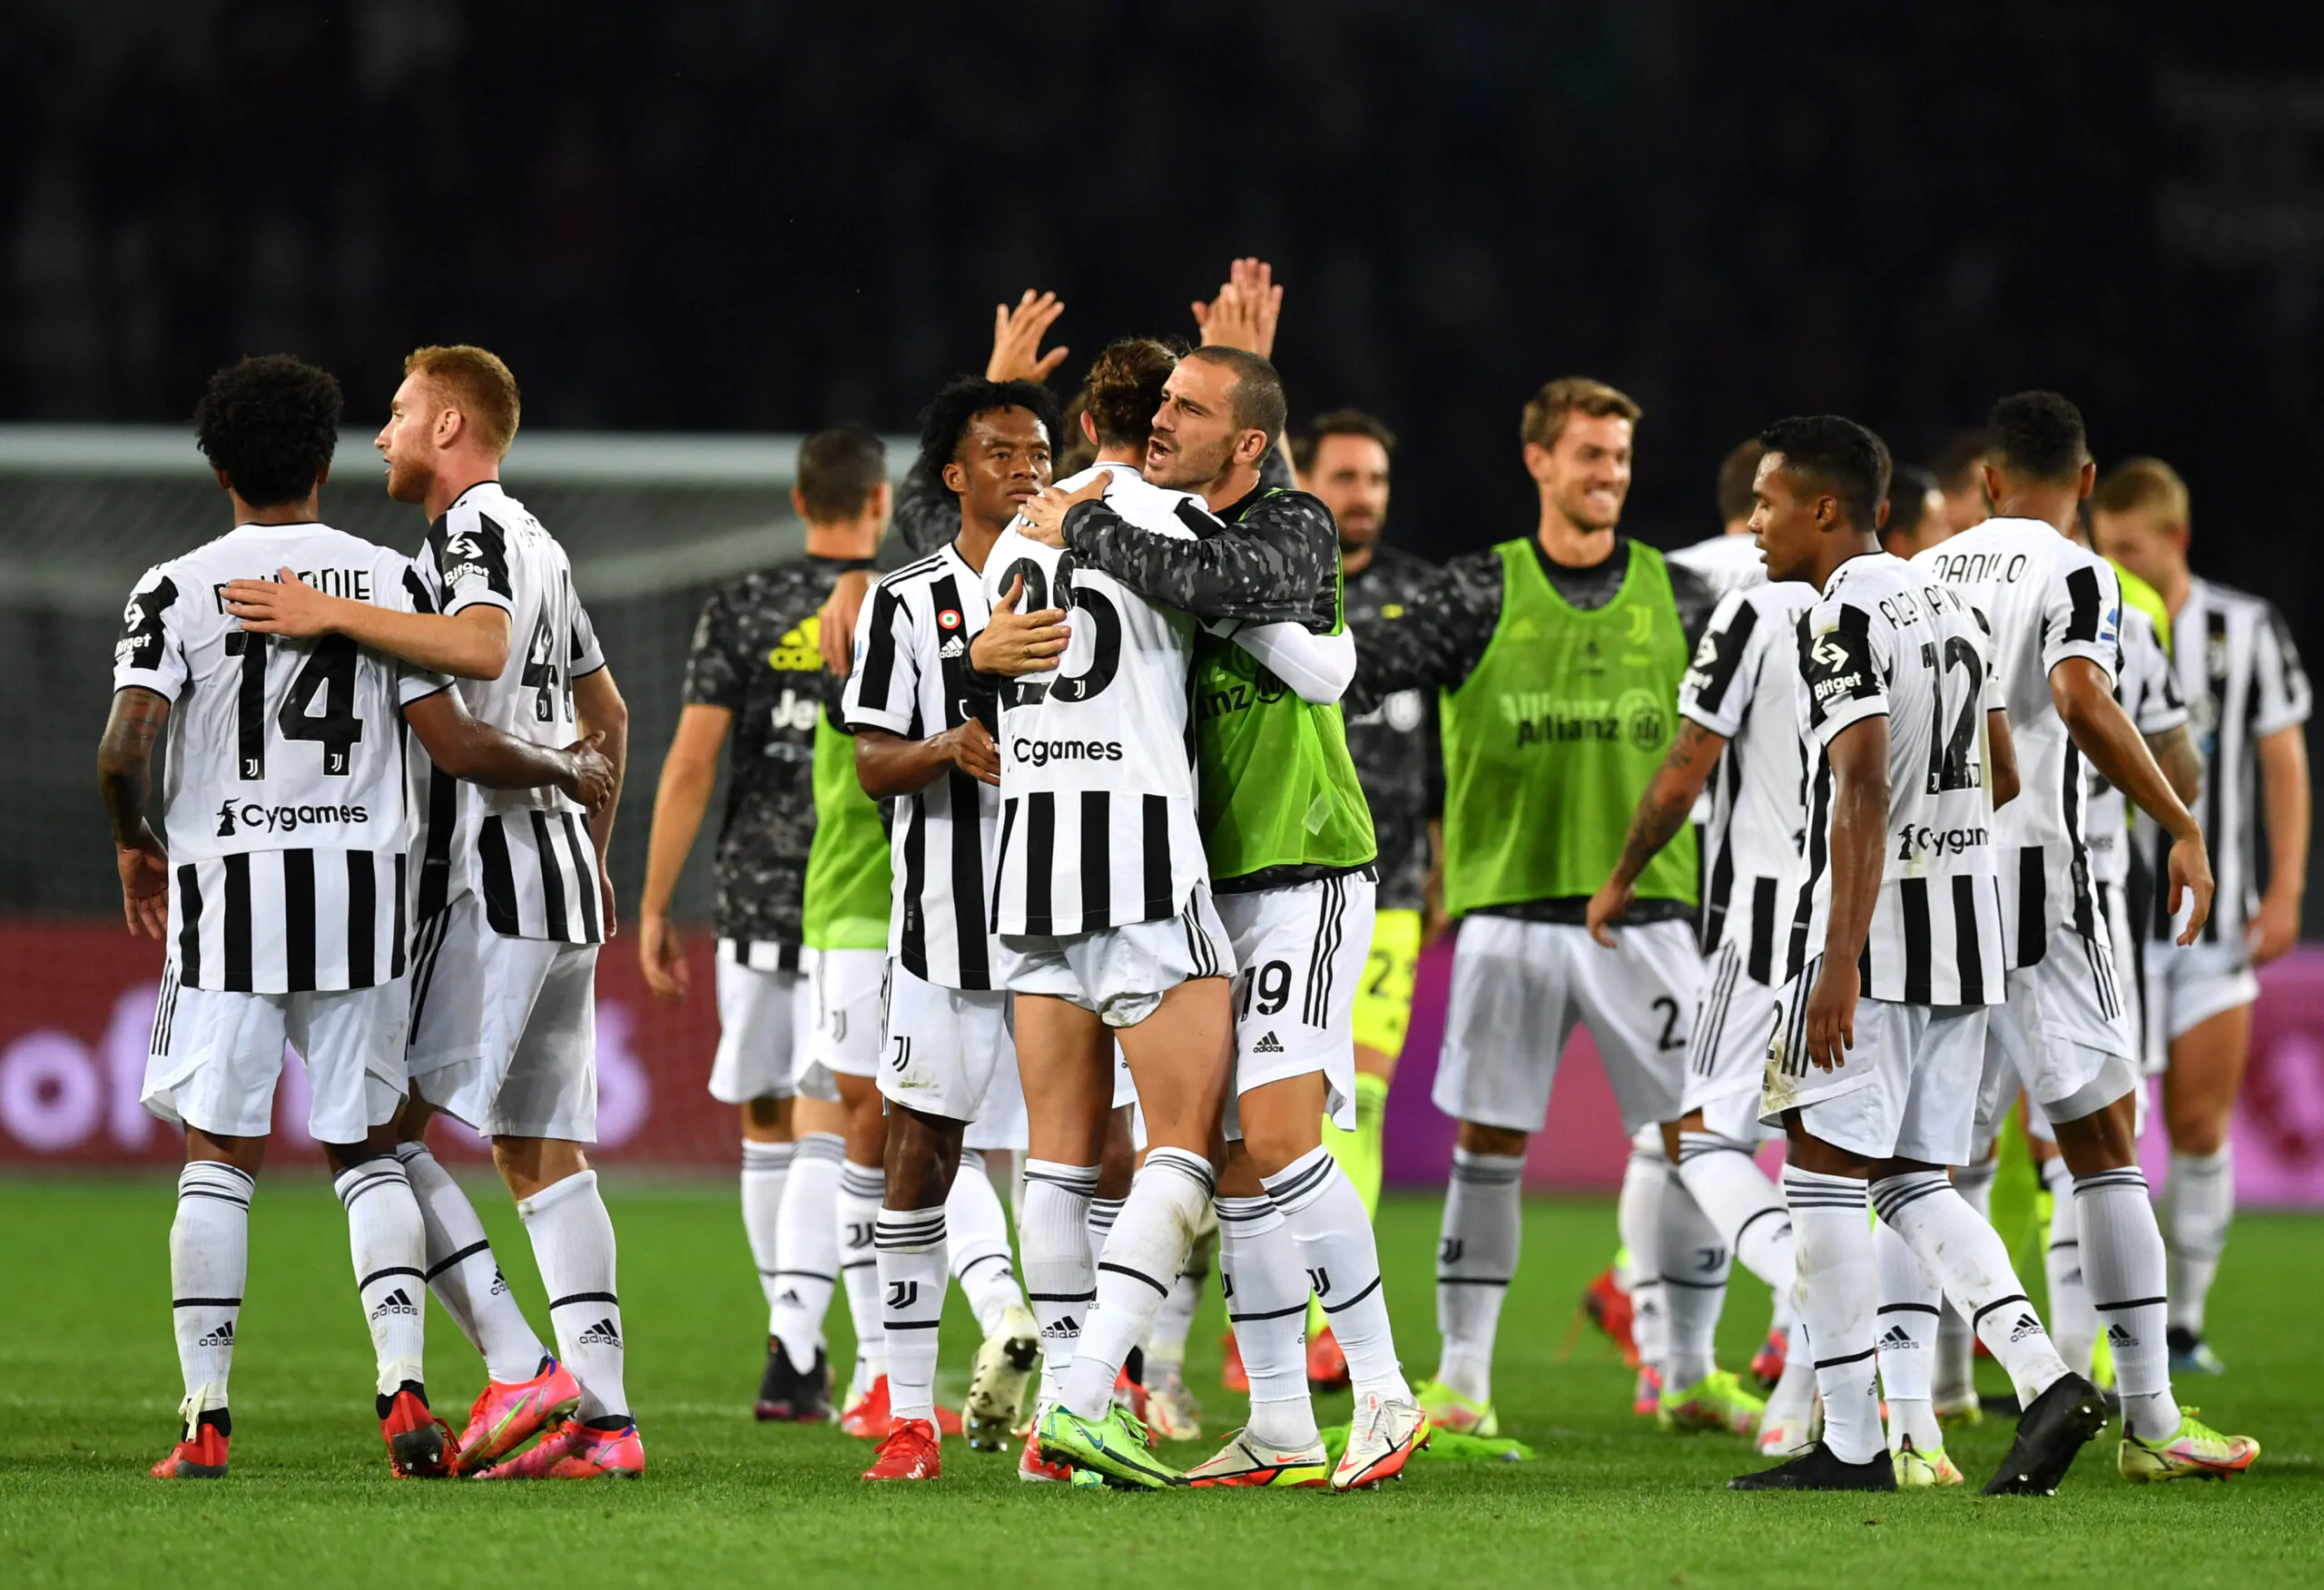 Nuova serie sulla Juventus: svelata la data d’uscita!